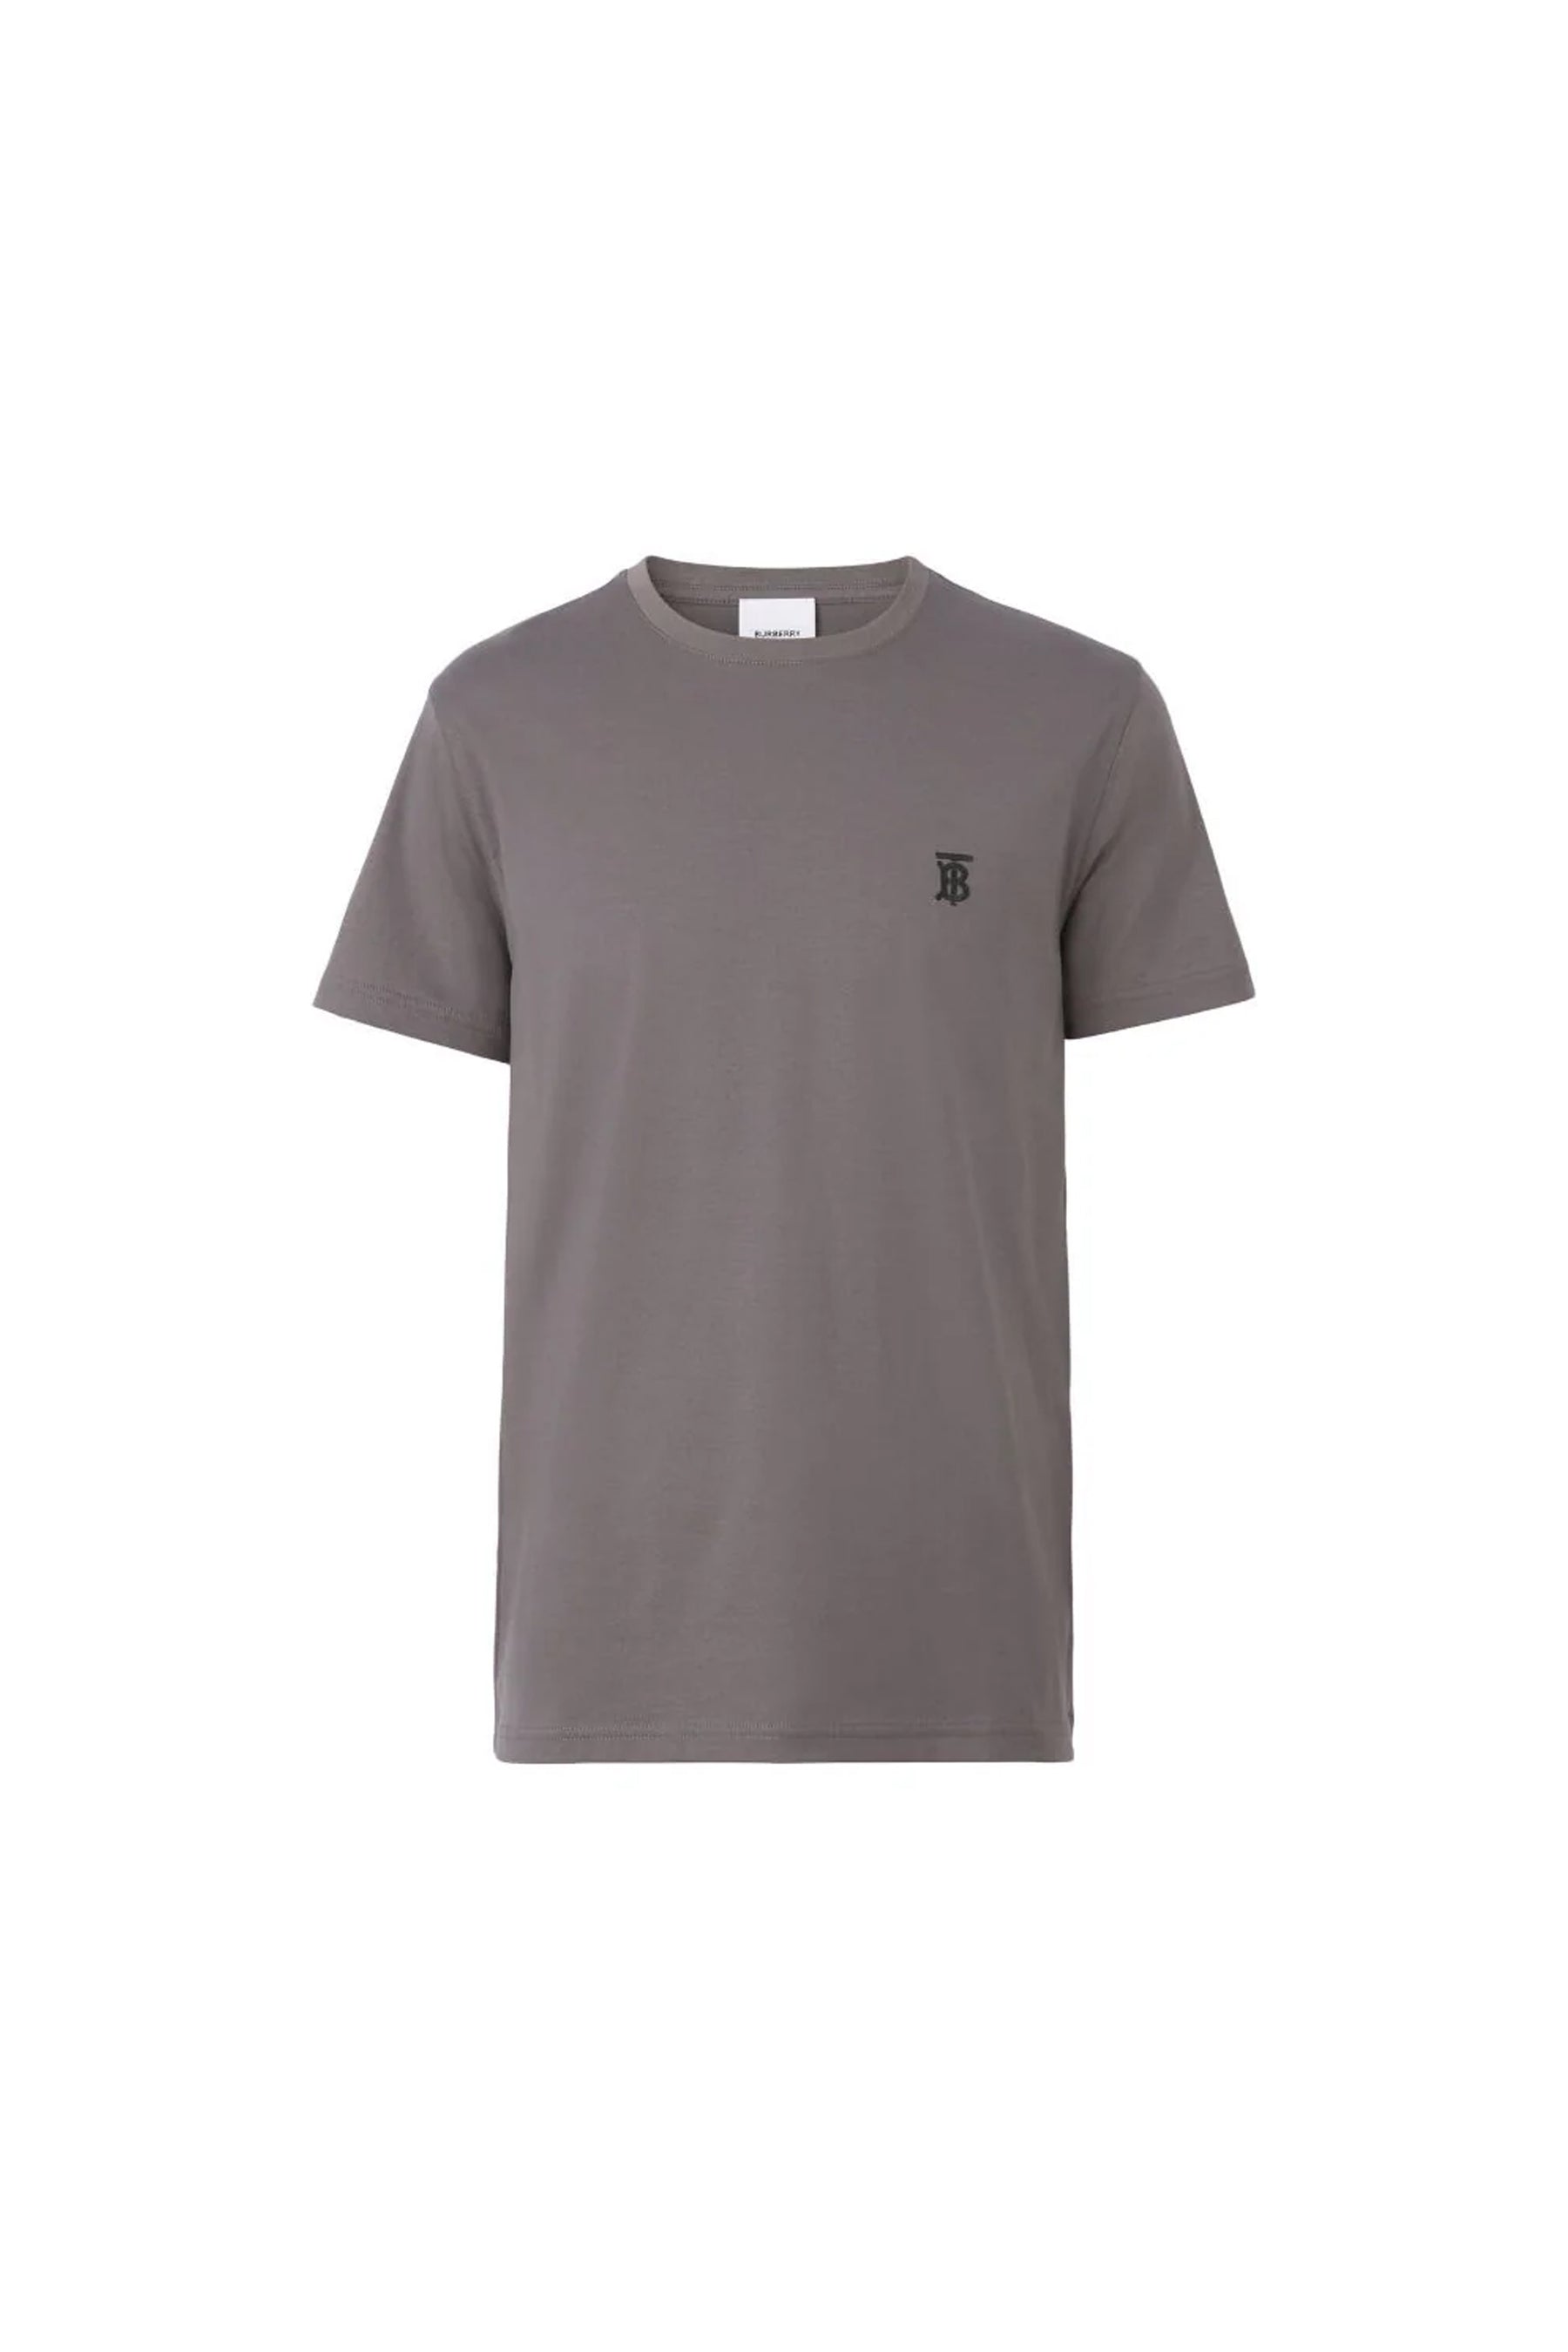 Burberry monogram-motif T-shirt